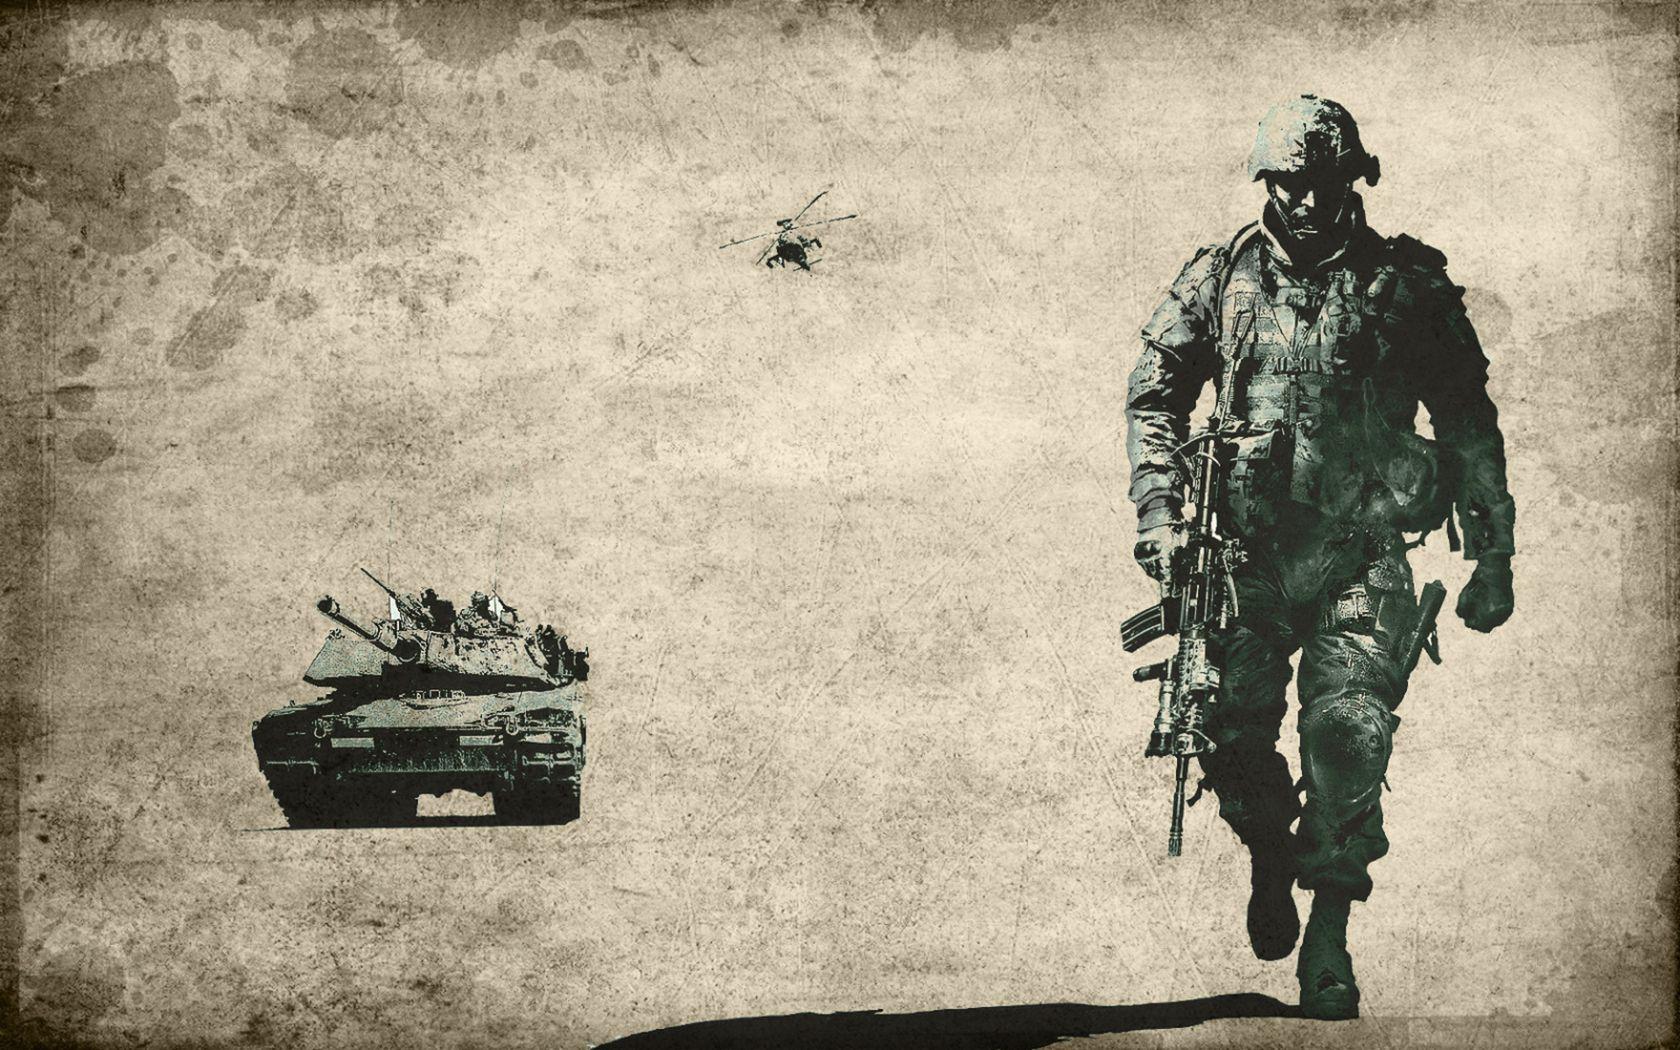 Download wallpaper: wallpaper for desktop, american soldier